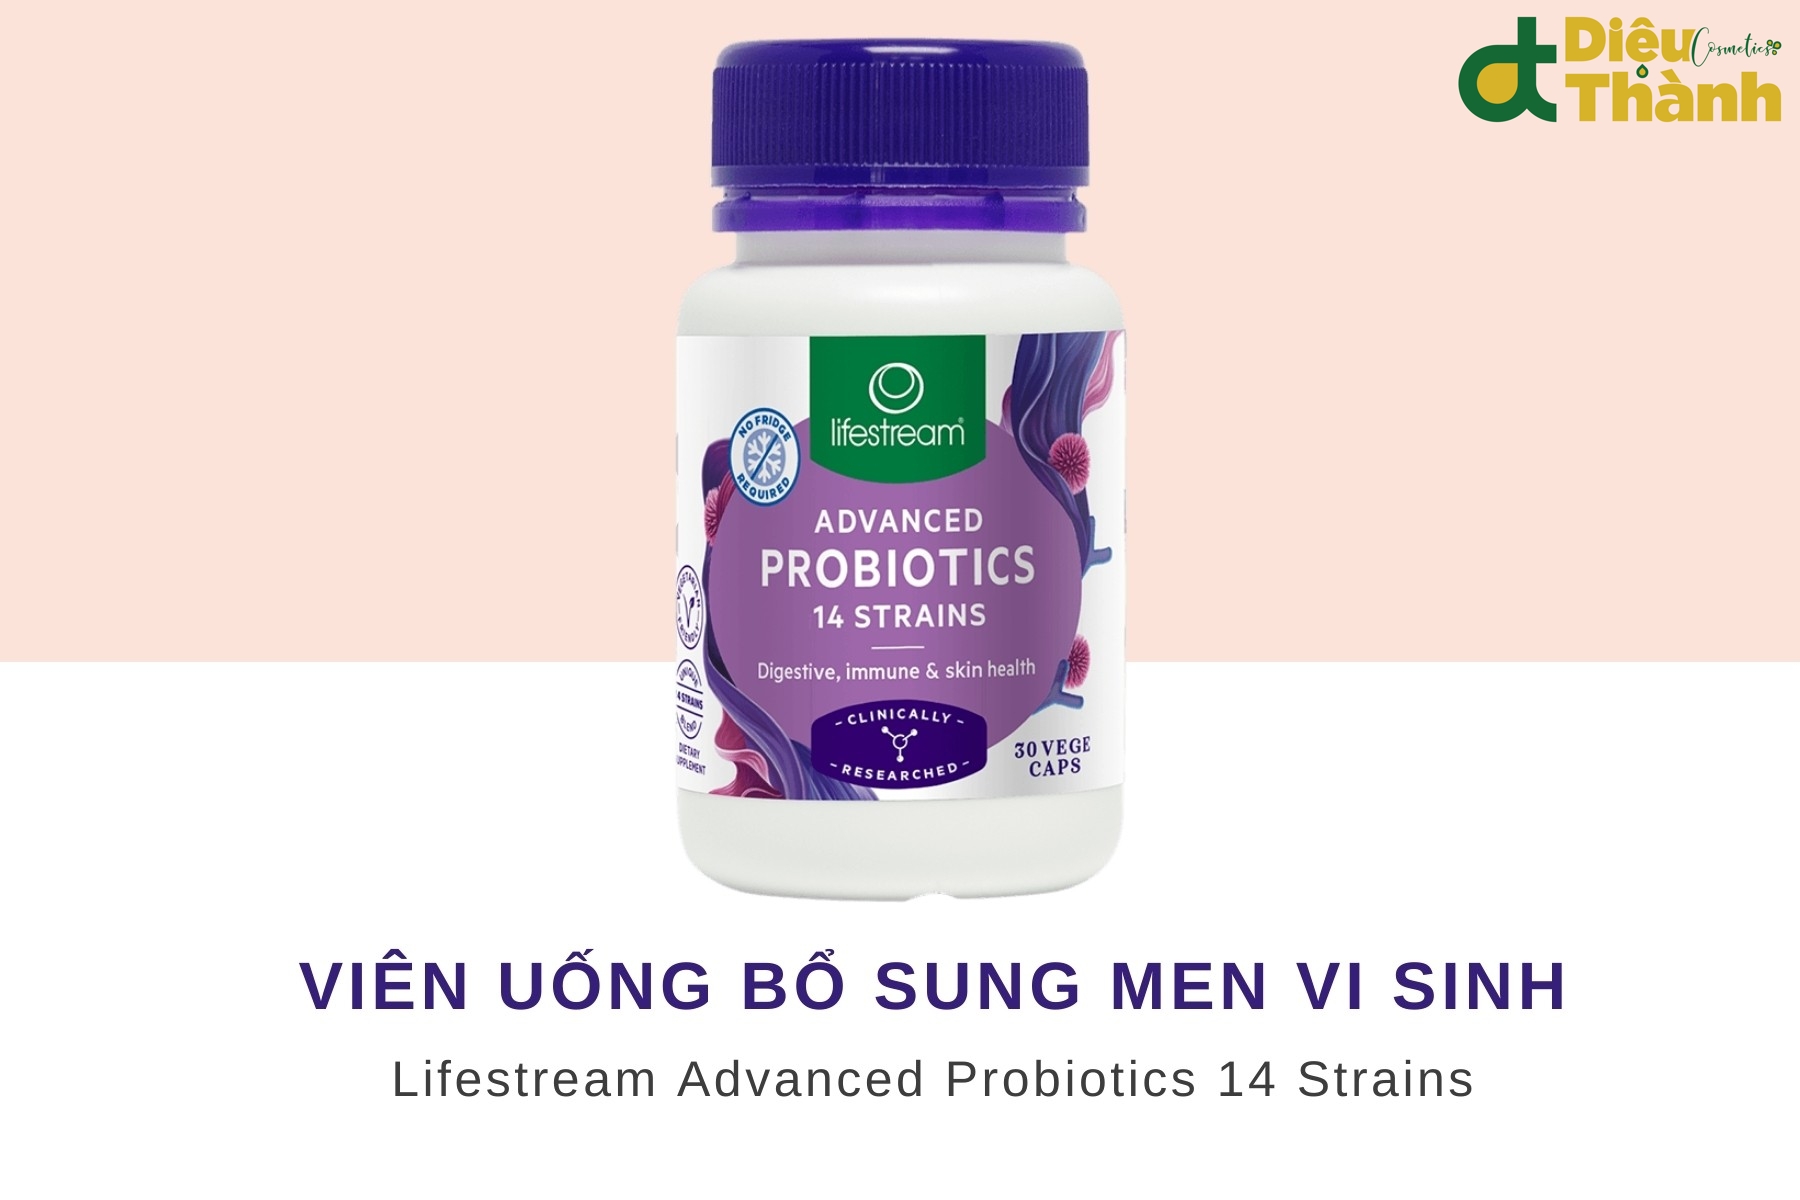 Lifestream Advanced Probiotics